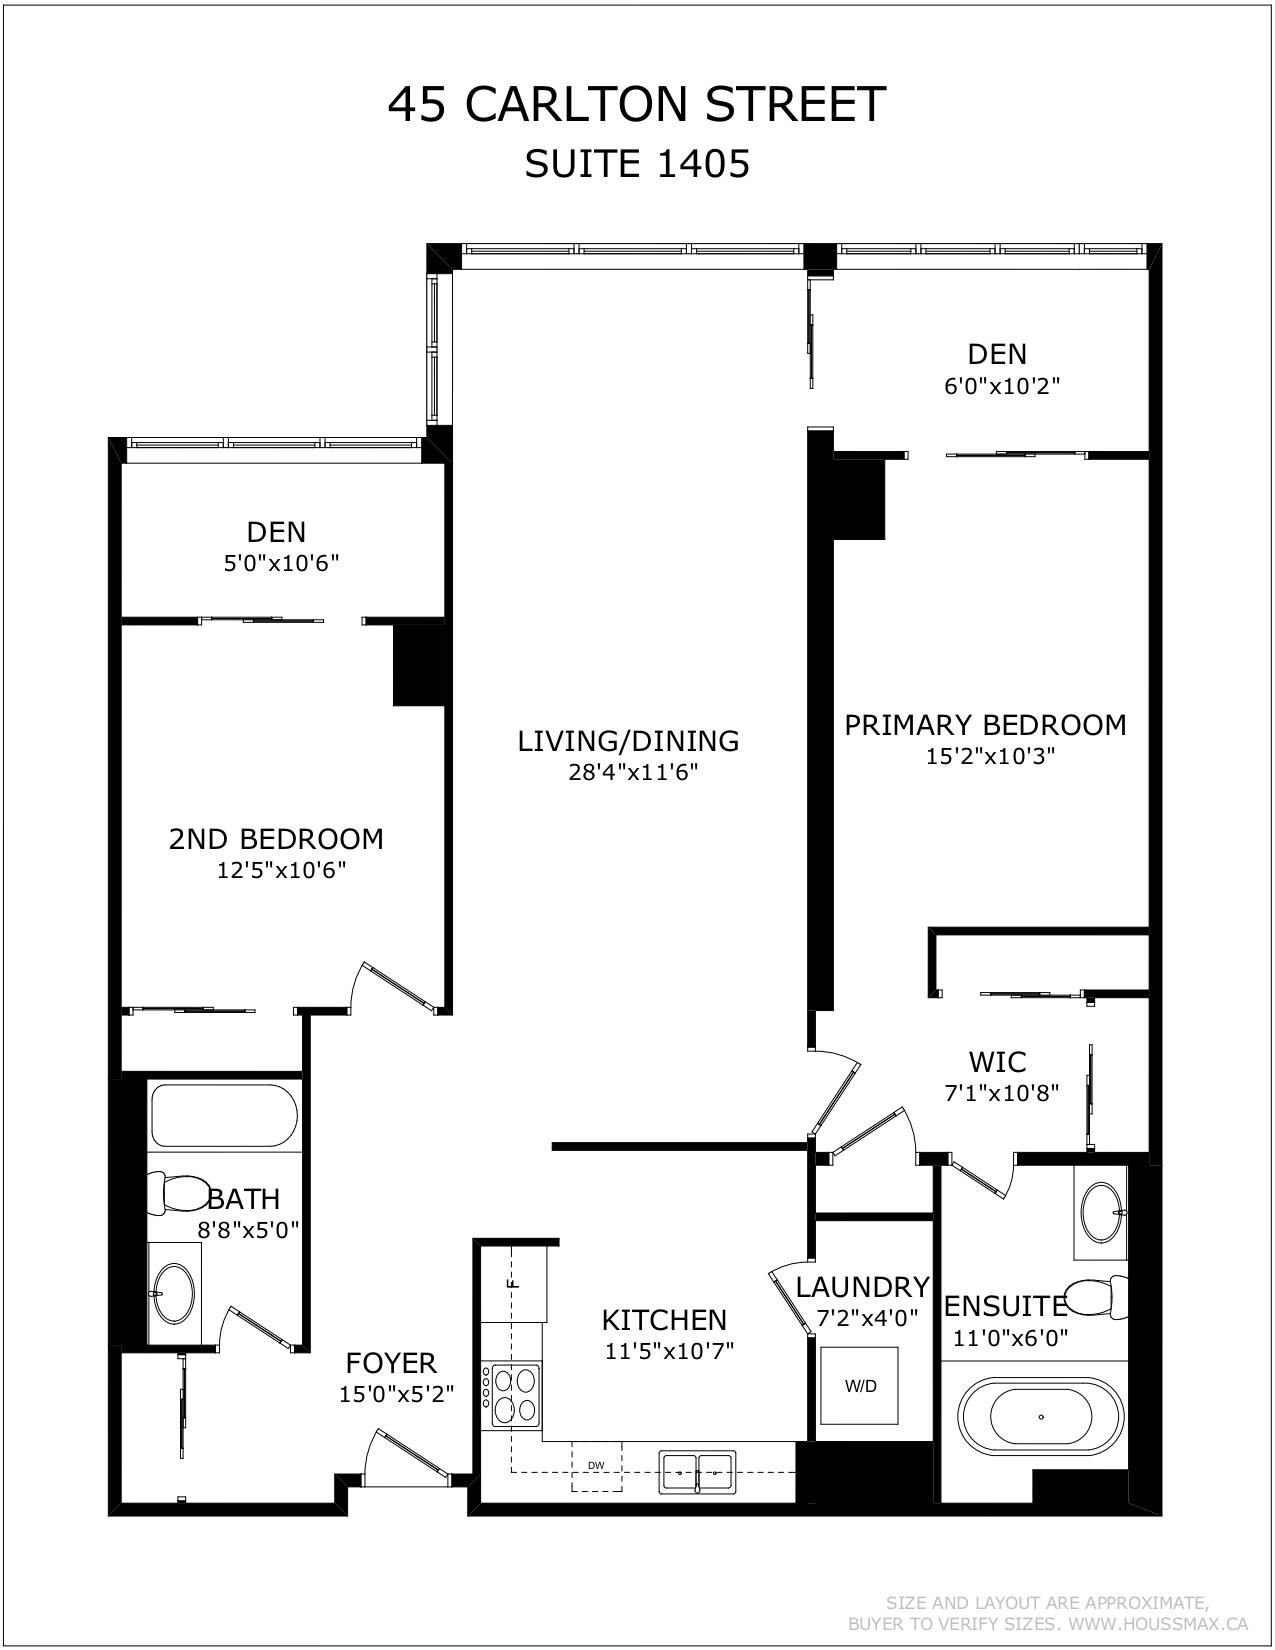 Floor plans for 45 Carlton St Unit 1405.